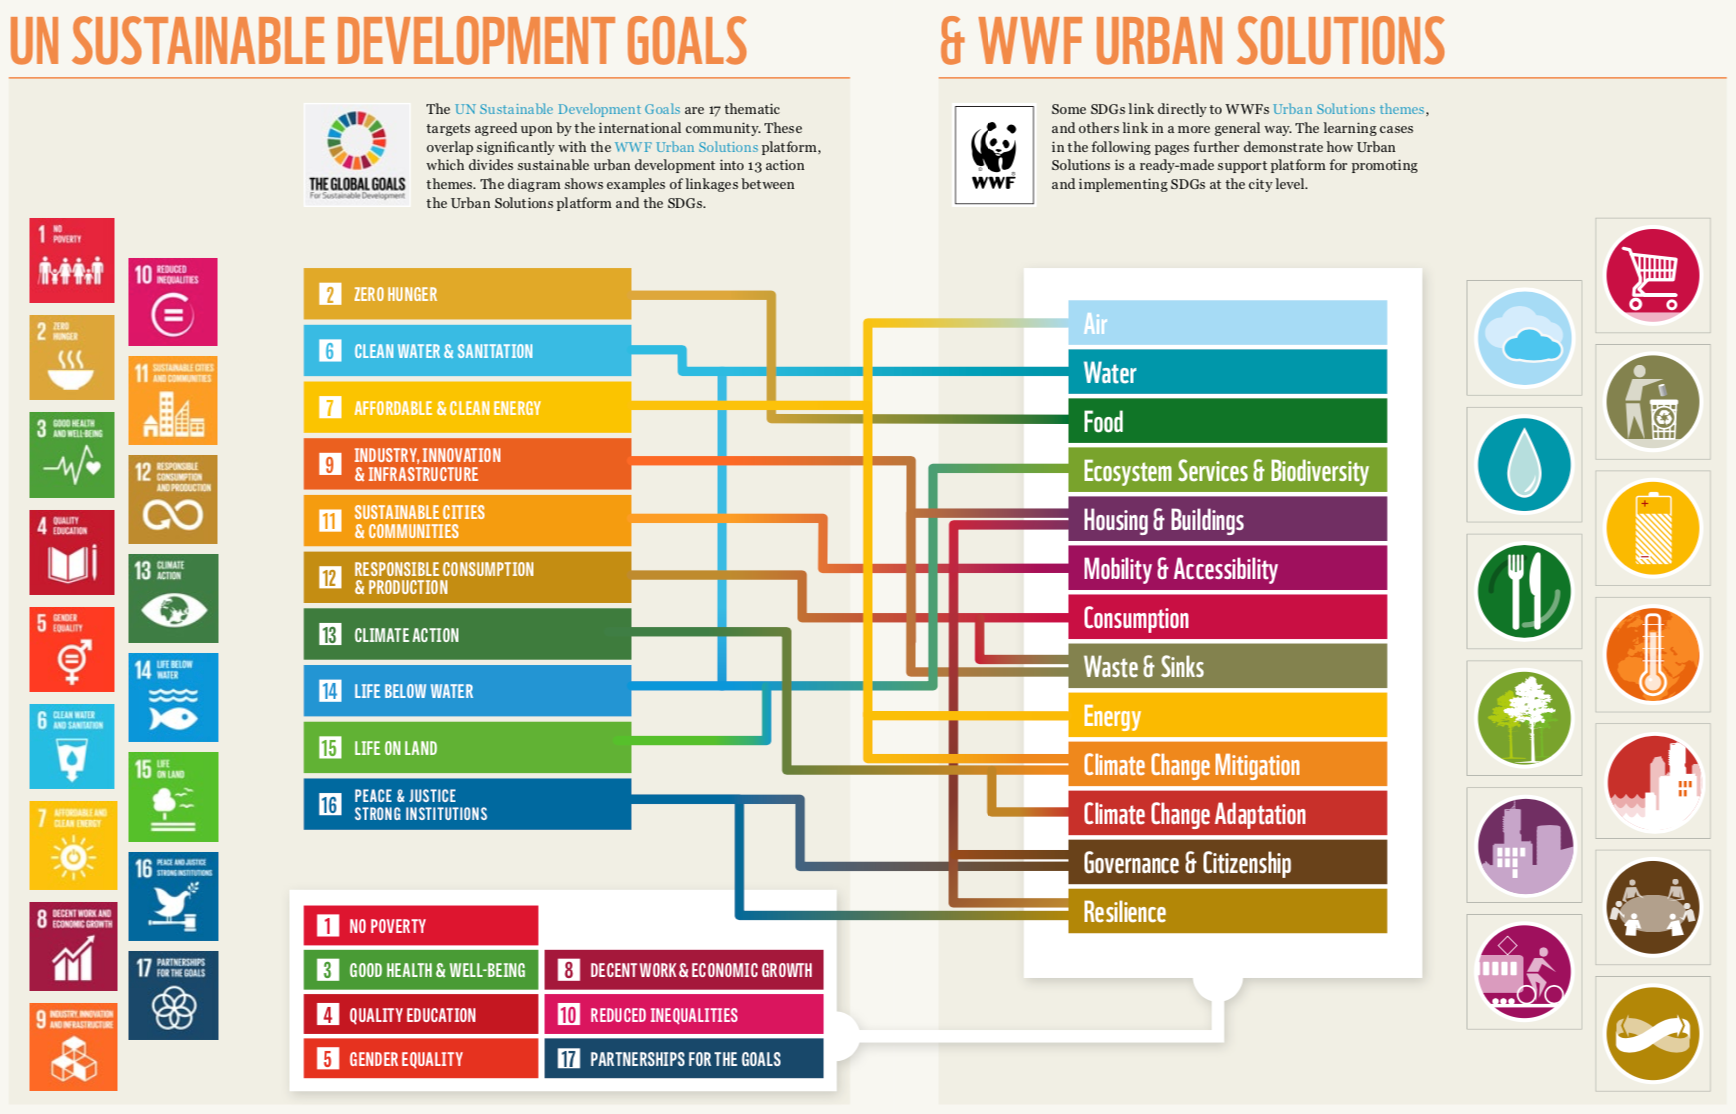 WWF Urban Solutions framework, linked to UN Sustainable Development Goals.